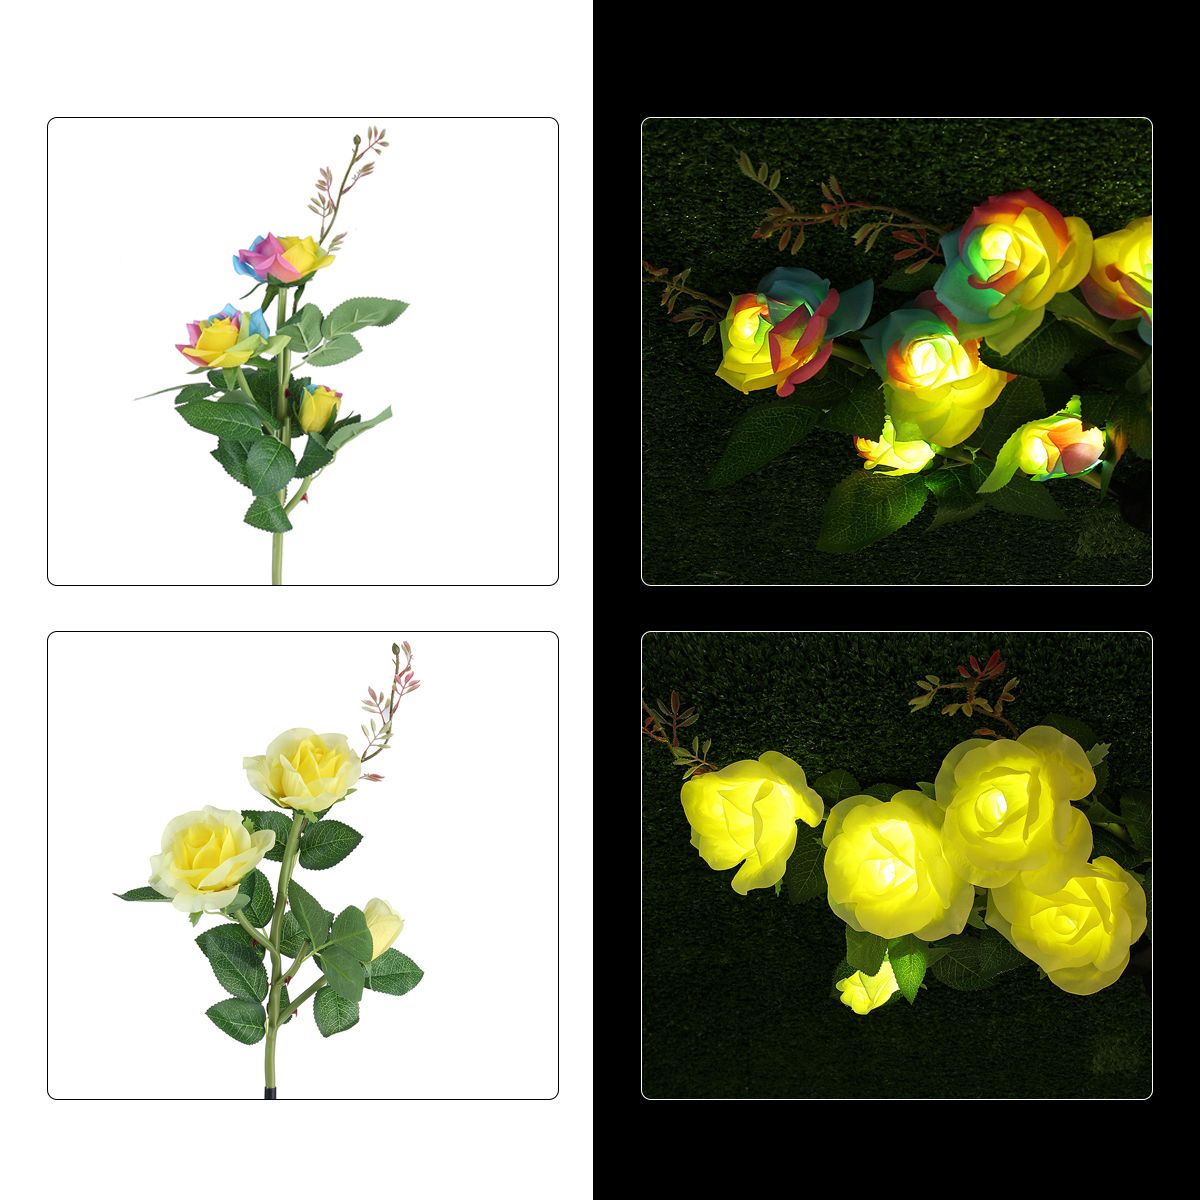 1PC2PCS-LED-Solar-Lawn-Light-Simulation-Flower-Lamp-Discoloration-Ball-flower-Outdoor-Yard-Lighting-1722994